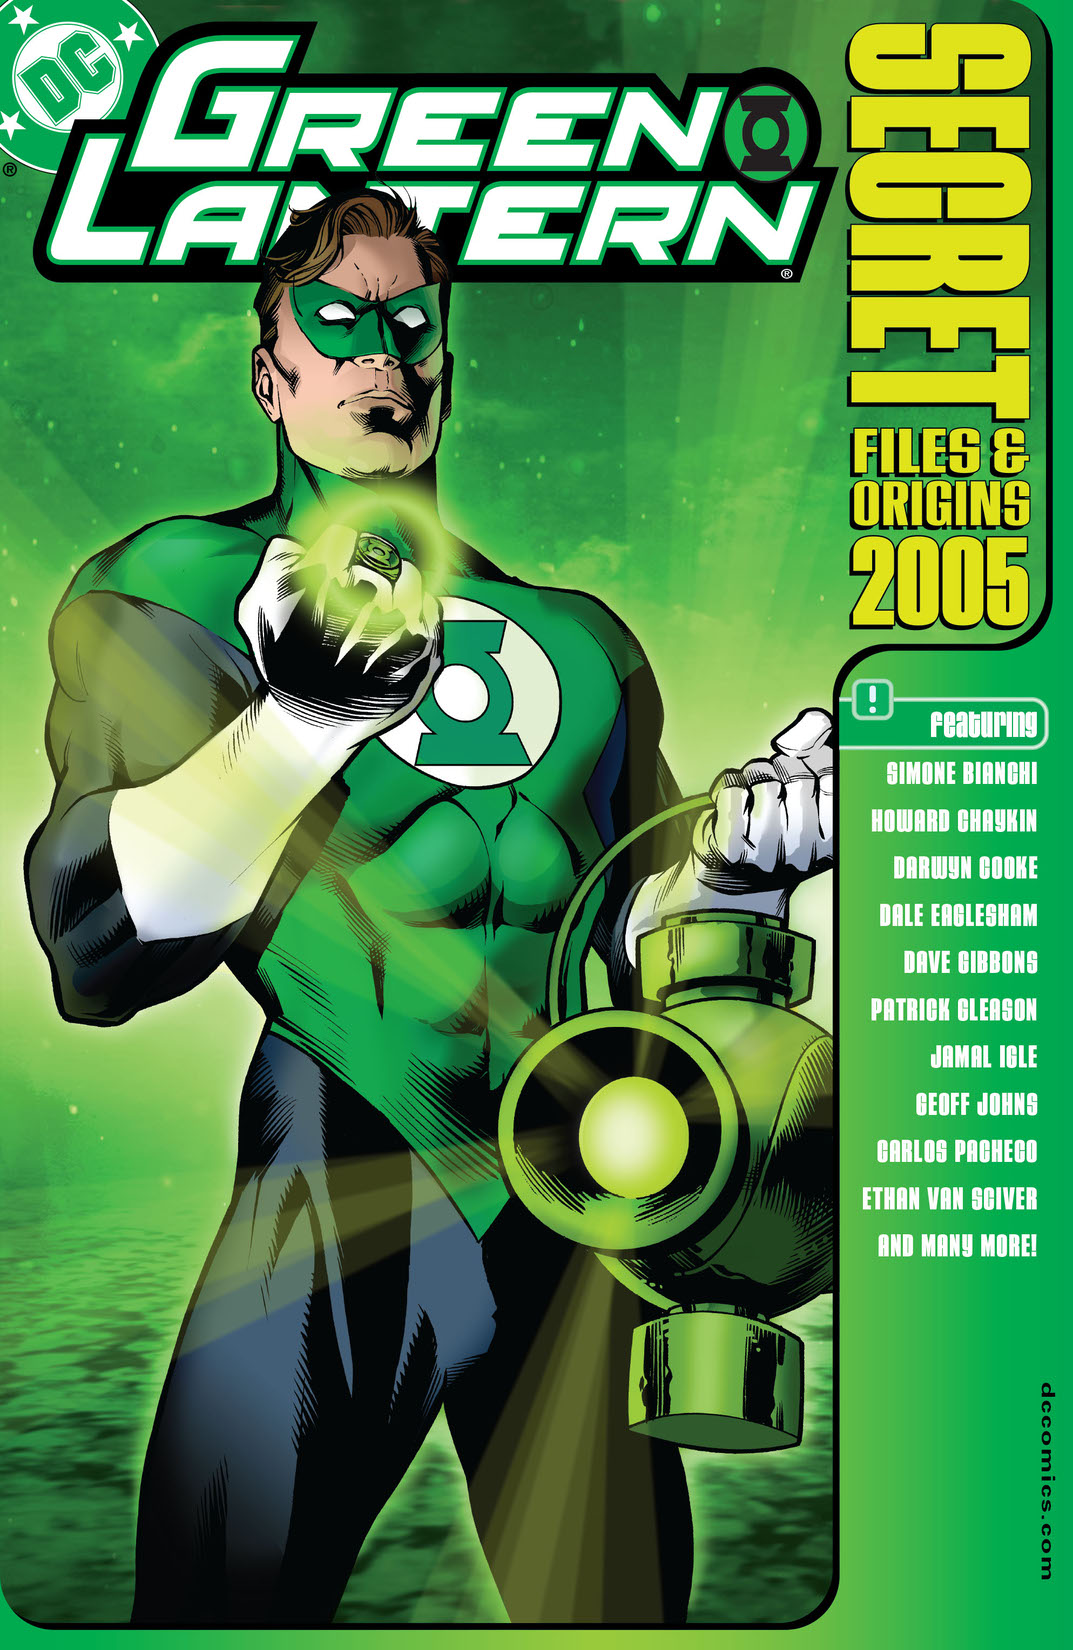 Green Lantern Secret Files 2005 #1 preview images